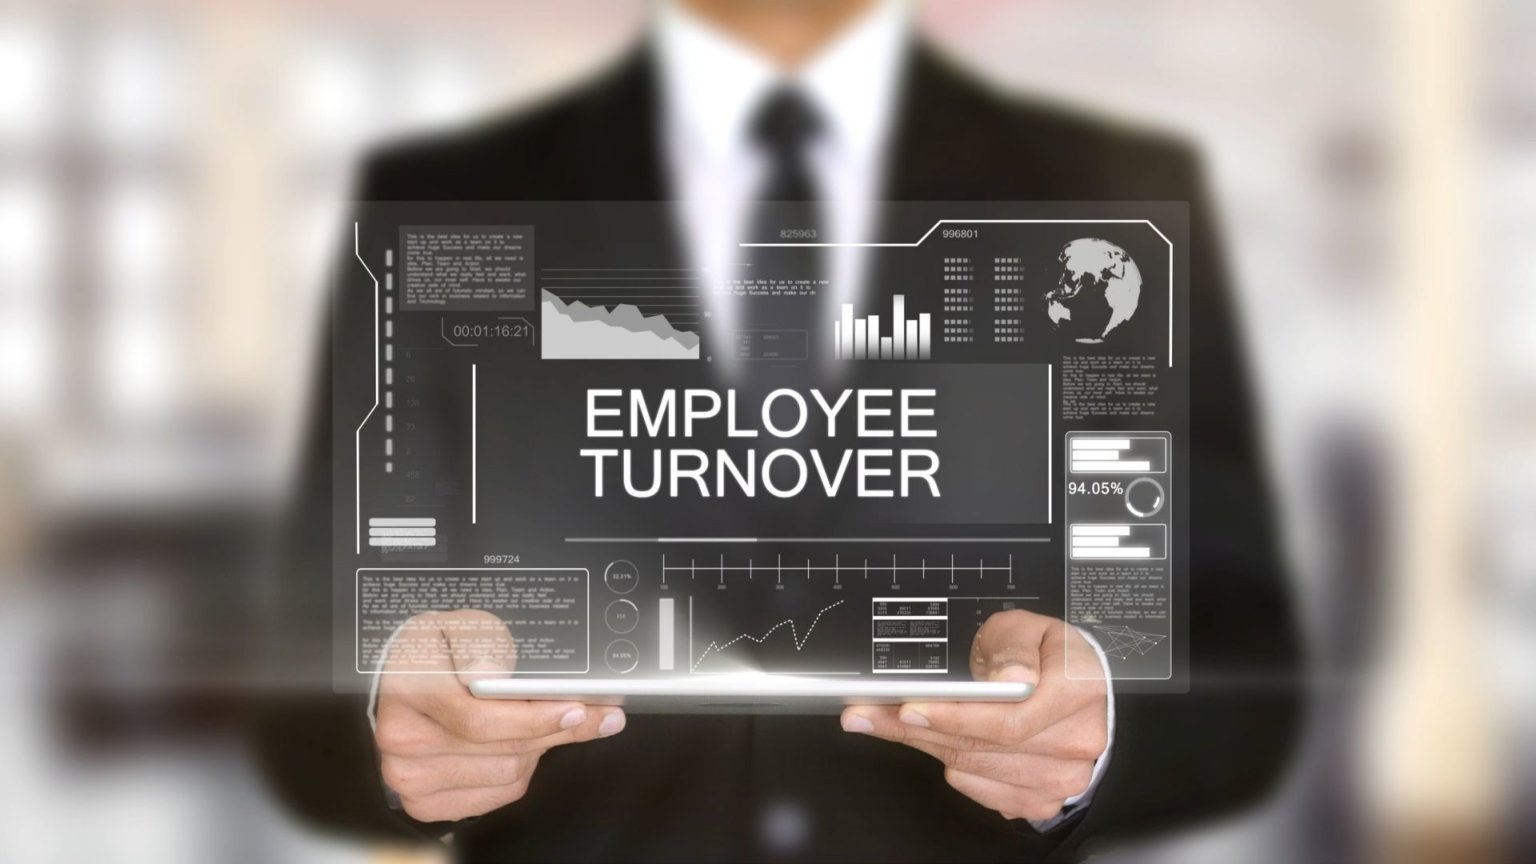 Reduce Employee Turnover – 4 Key Strategies